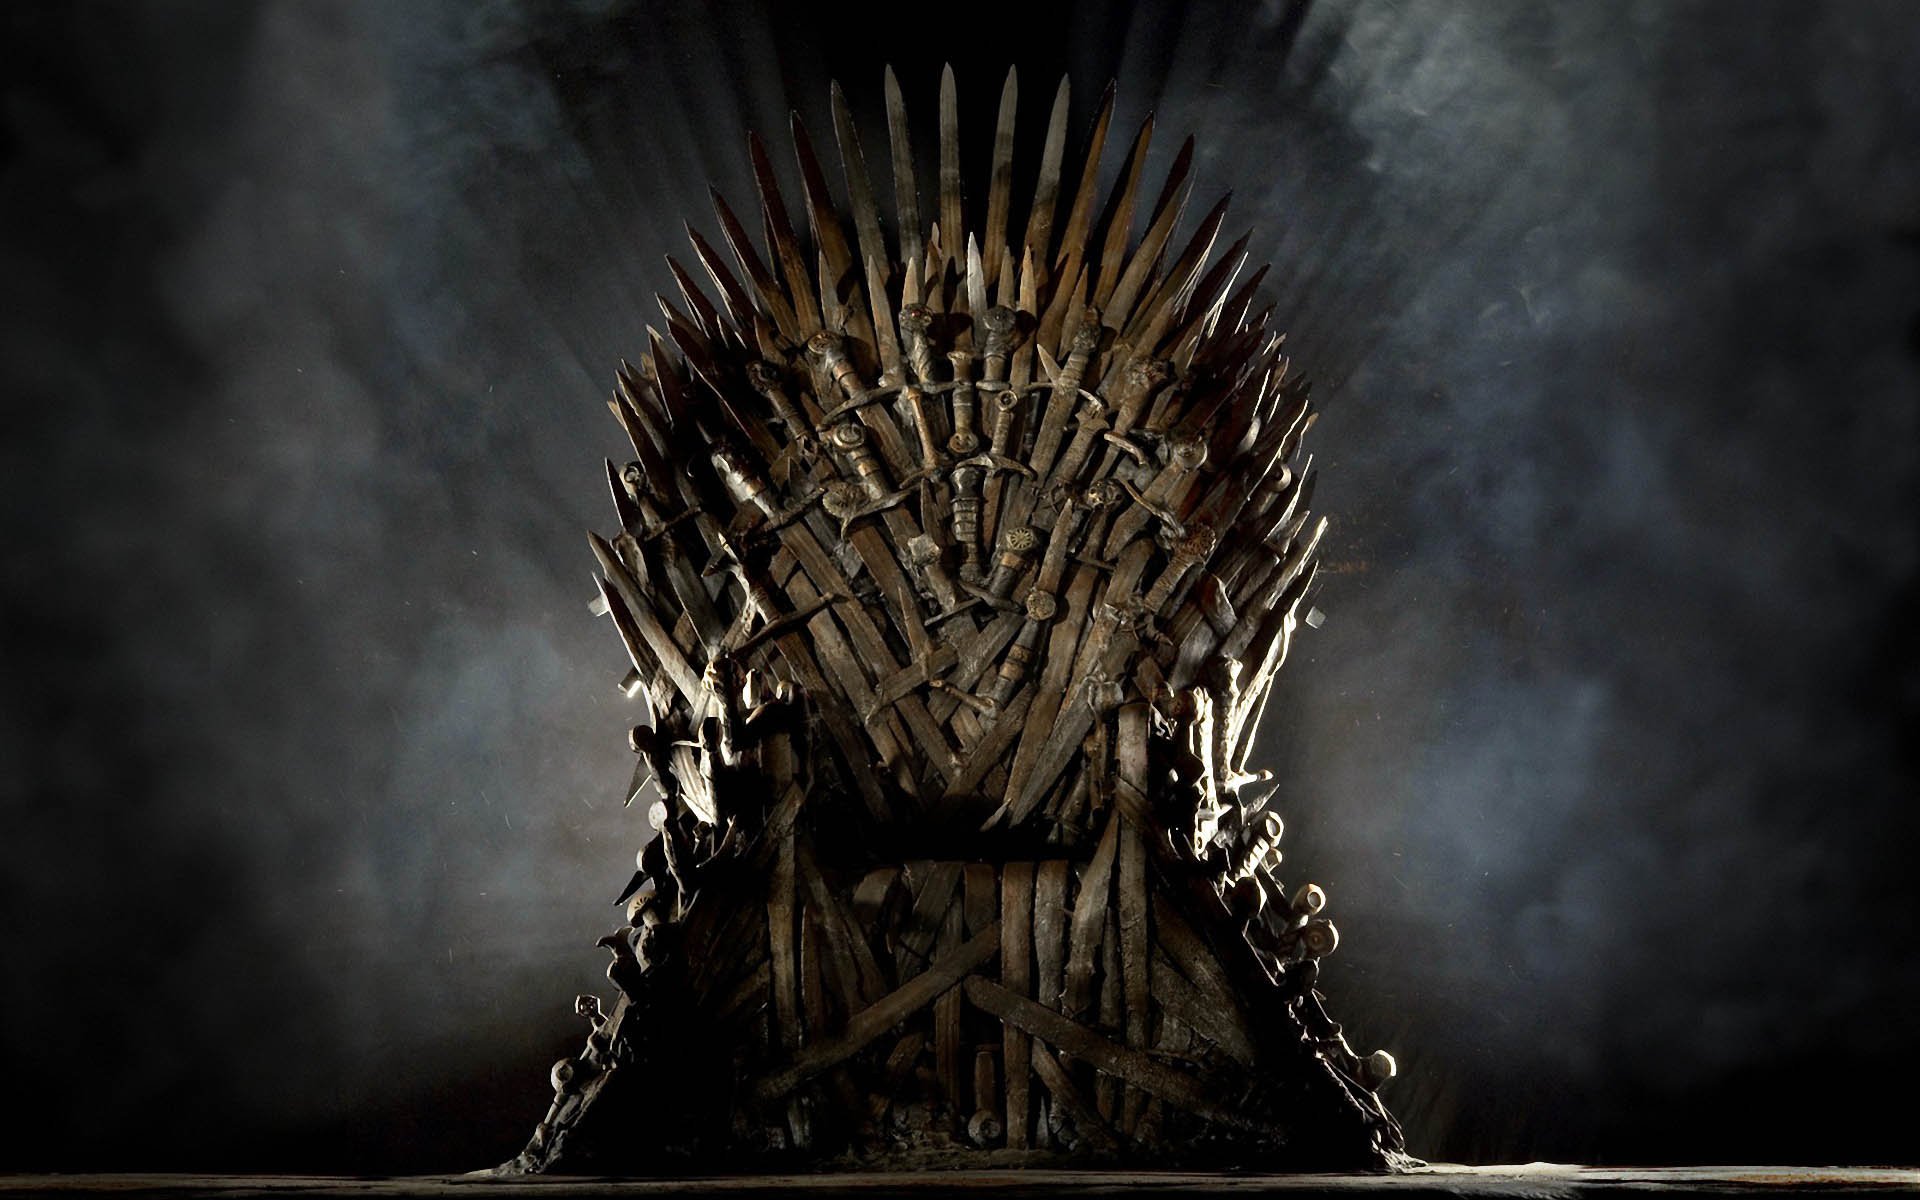 TellTale Game Of Thrones Releases On Dec 2